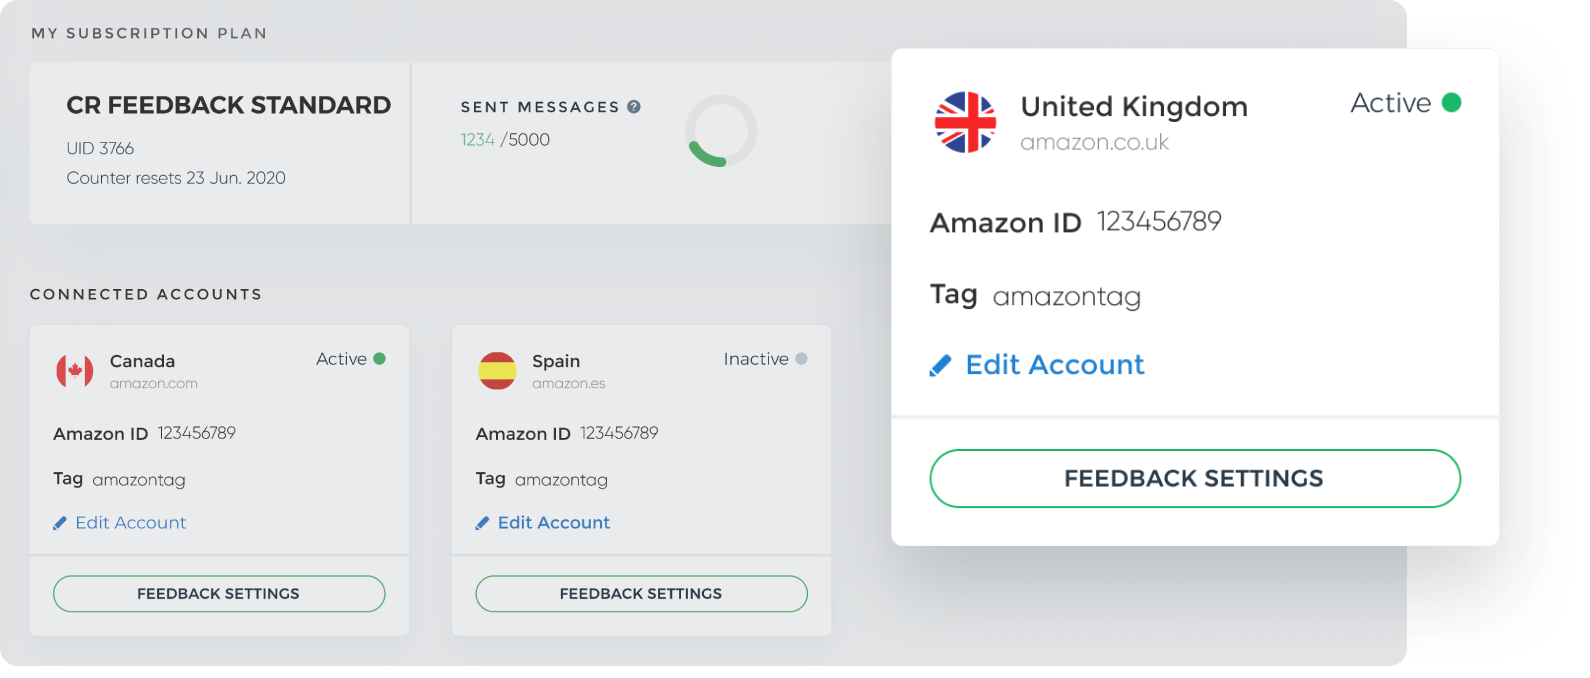 Choosing an Amazon Account